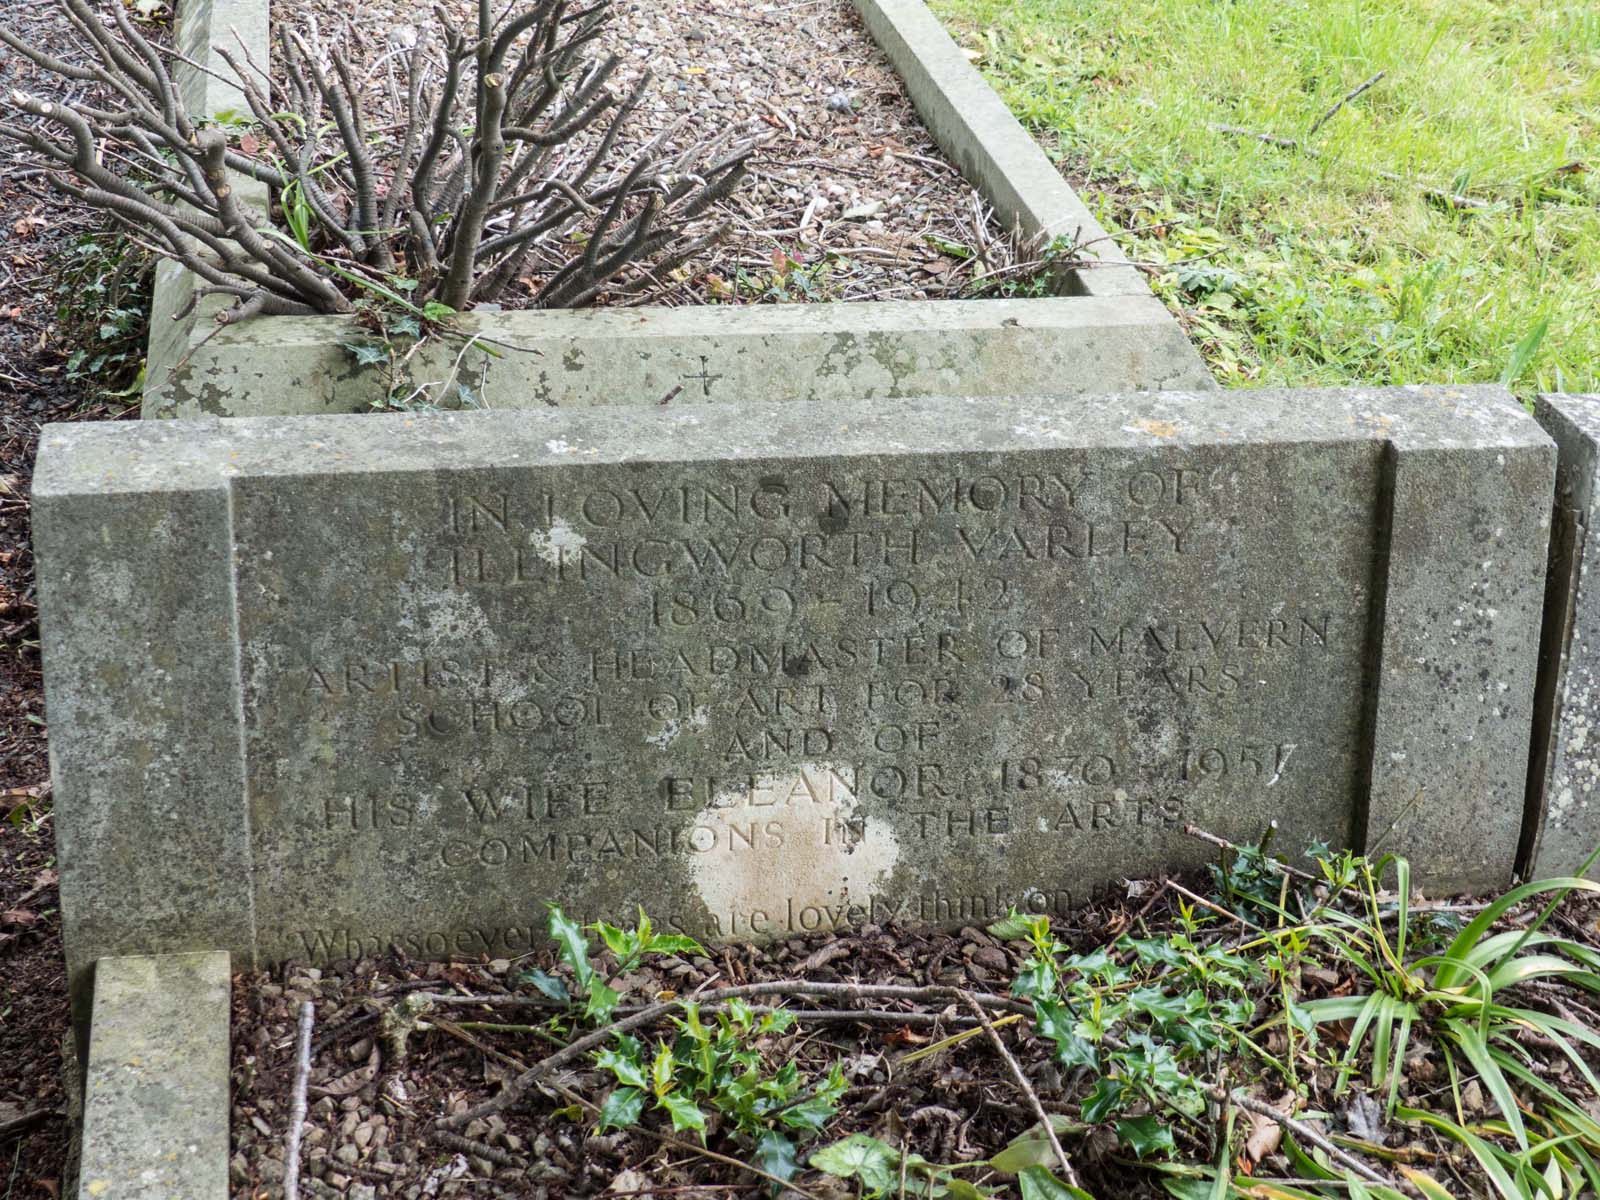 Grave of Illingworth Varley